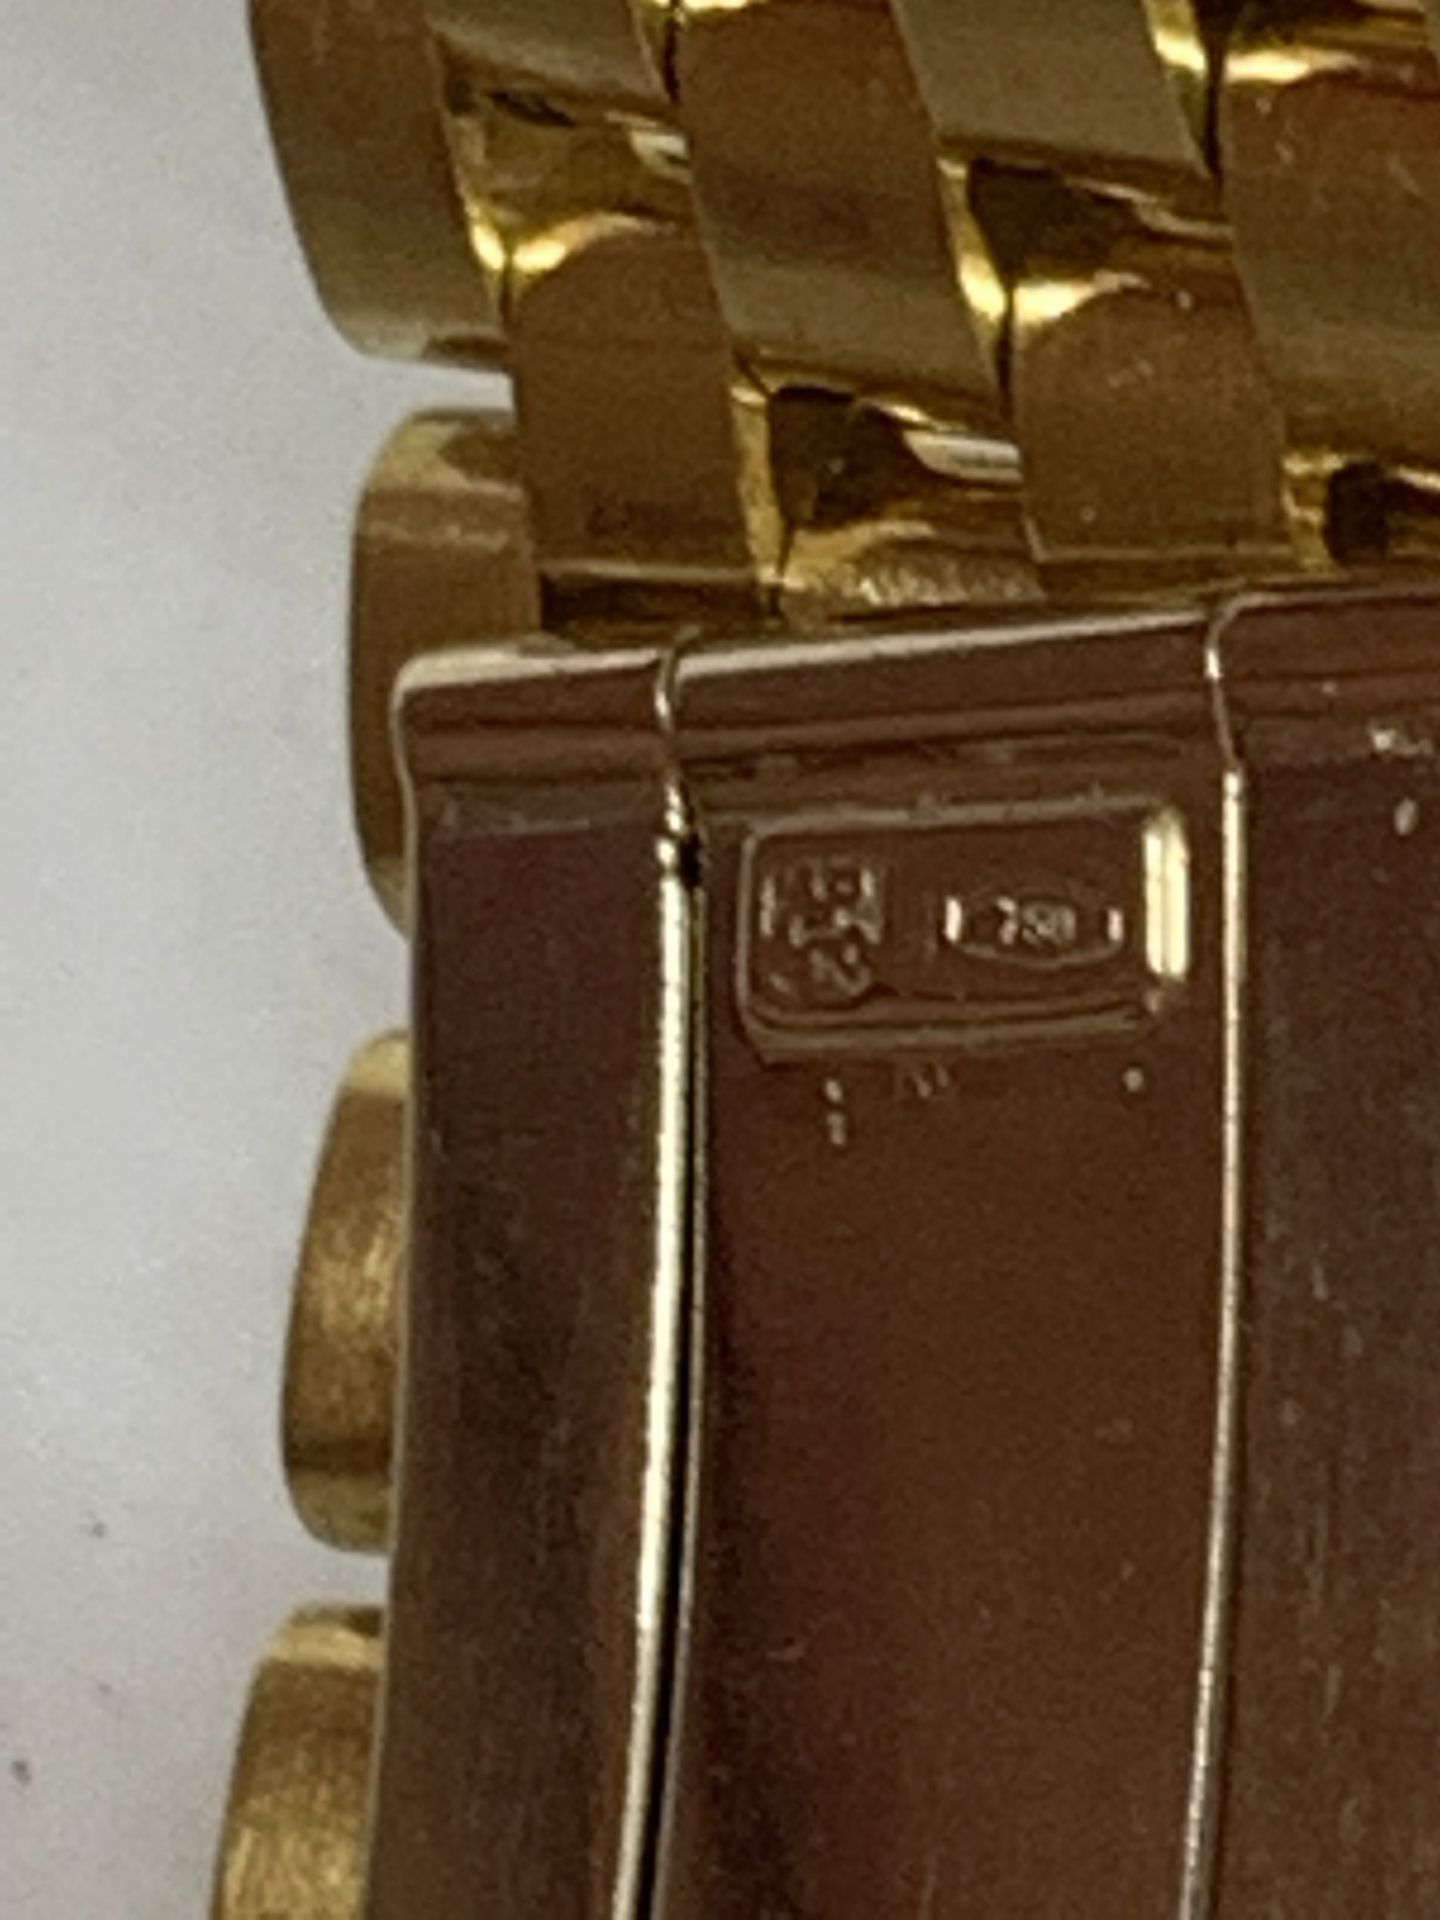 AUDEMARS PIQUET 18ct GOLD WATCH 93 GRAMS - Image 6 of 6